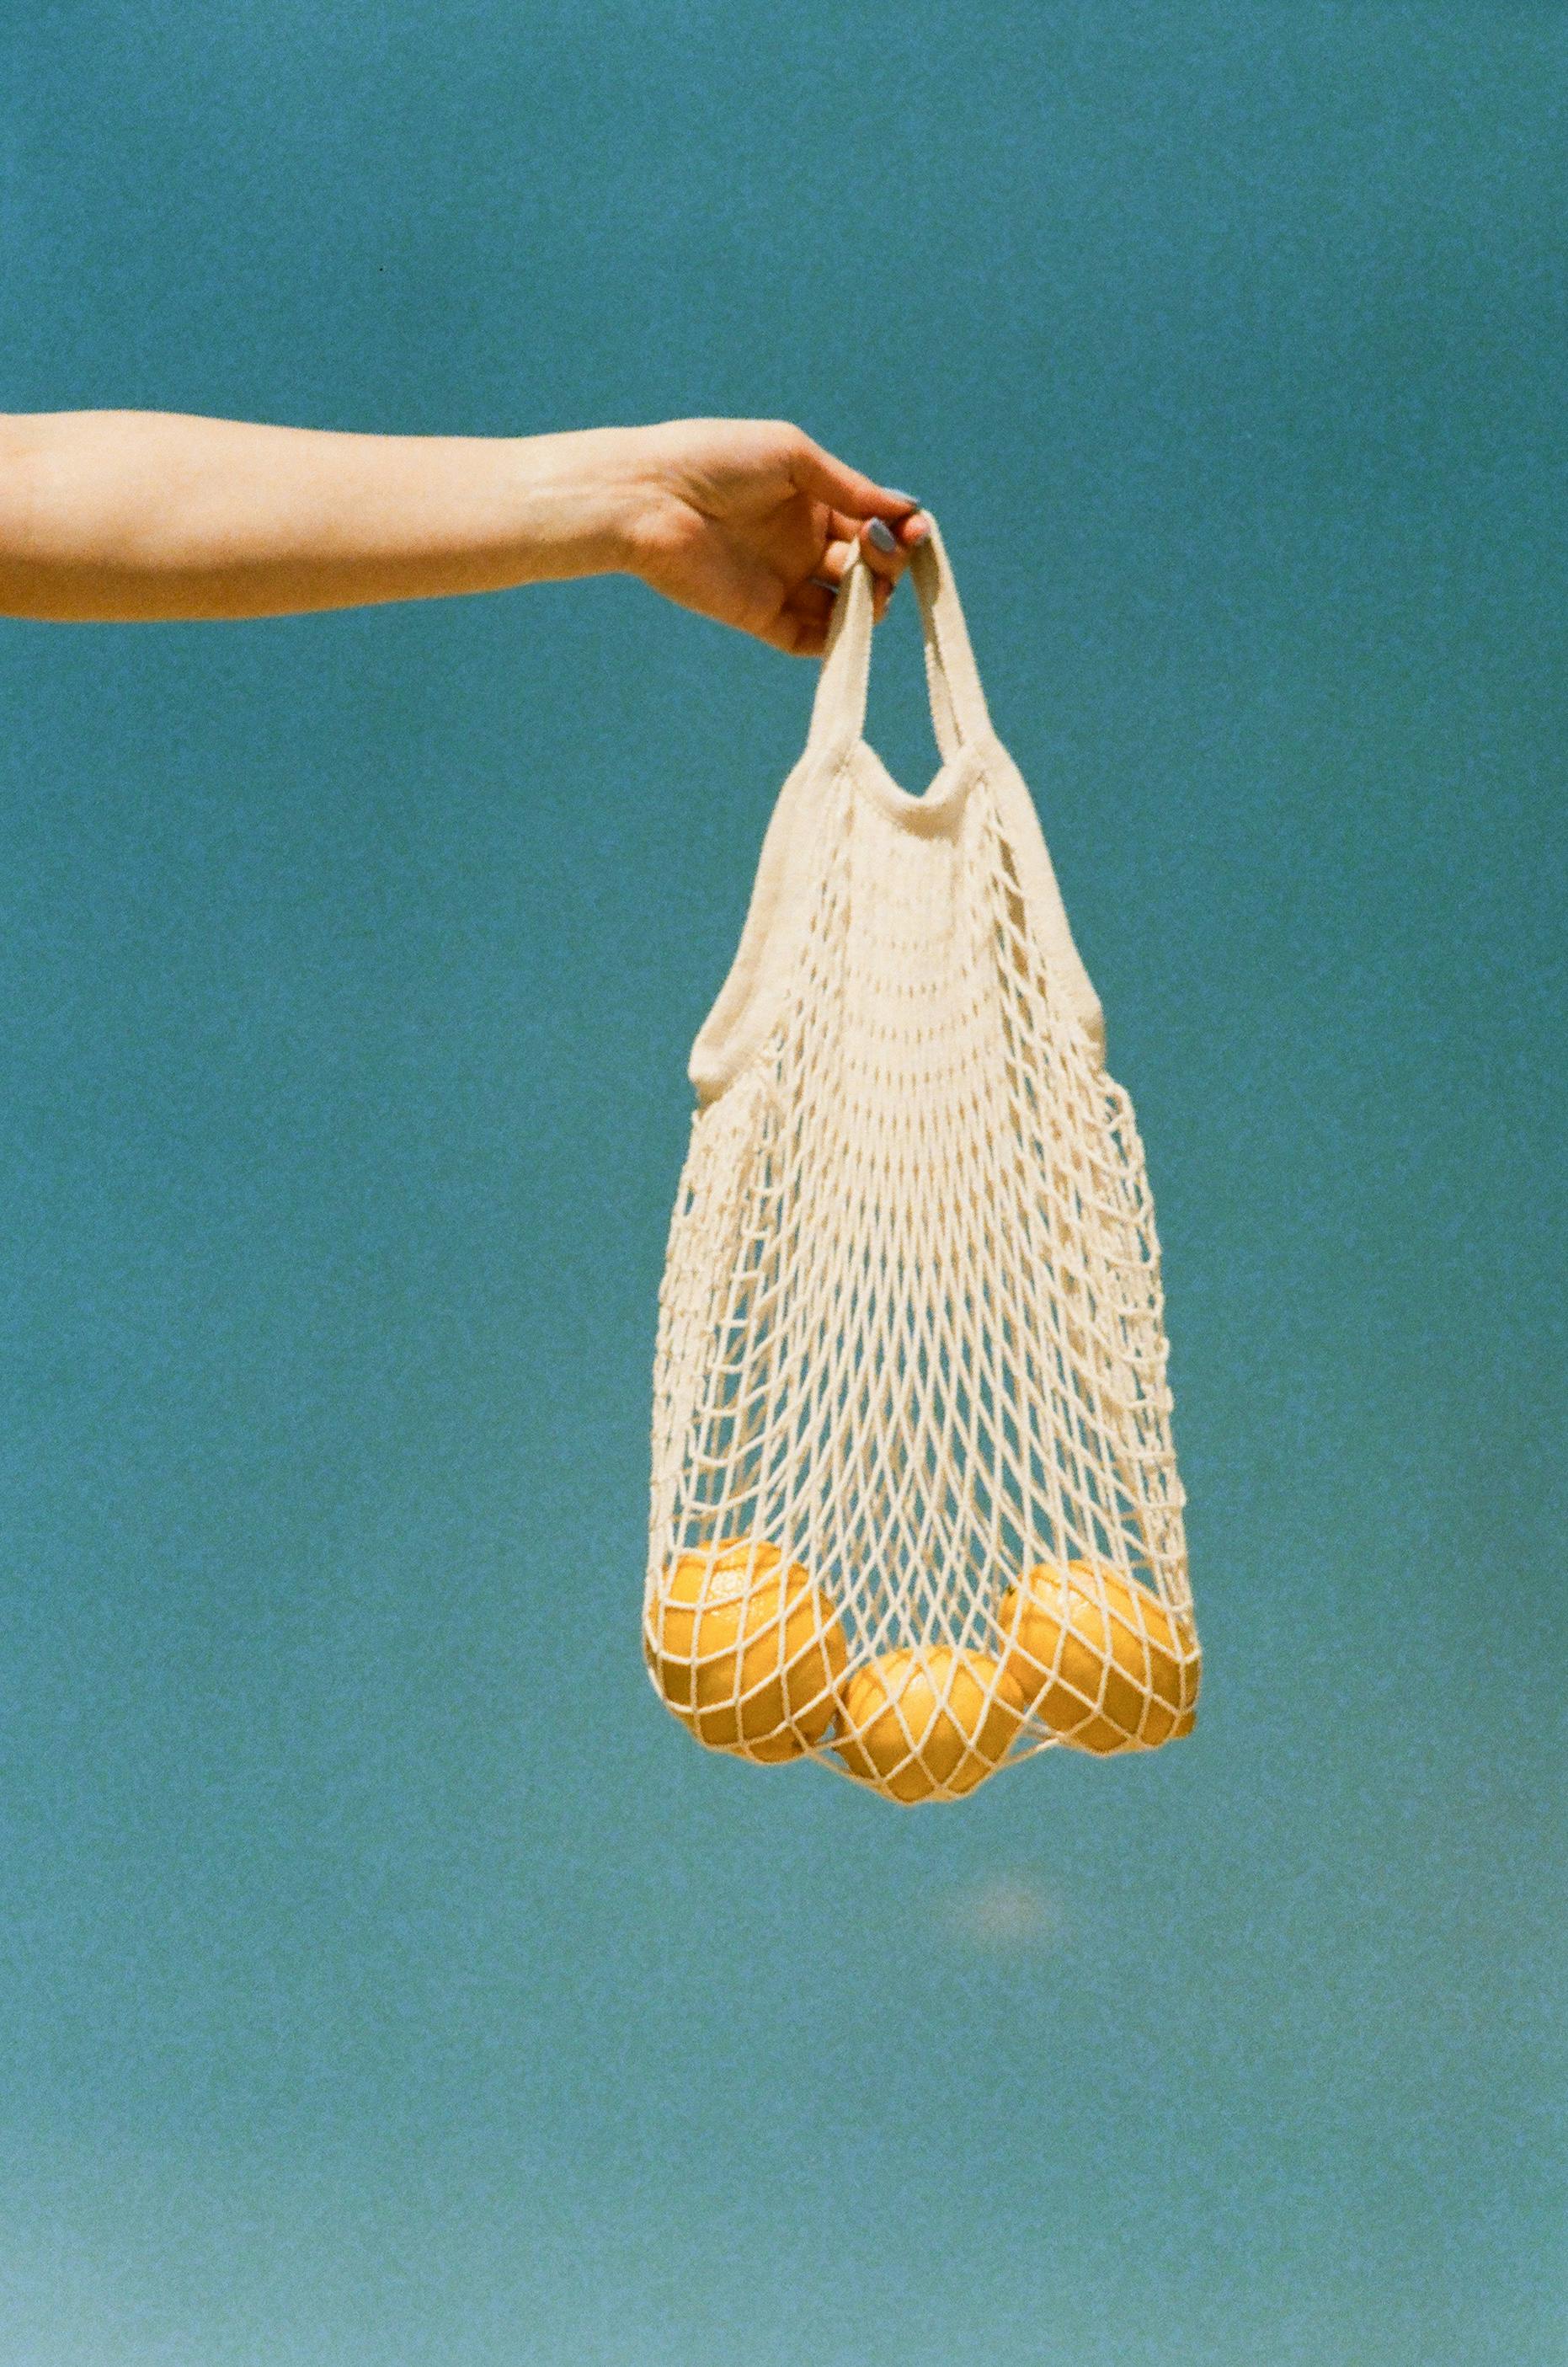 hand holding net bag with lemons